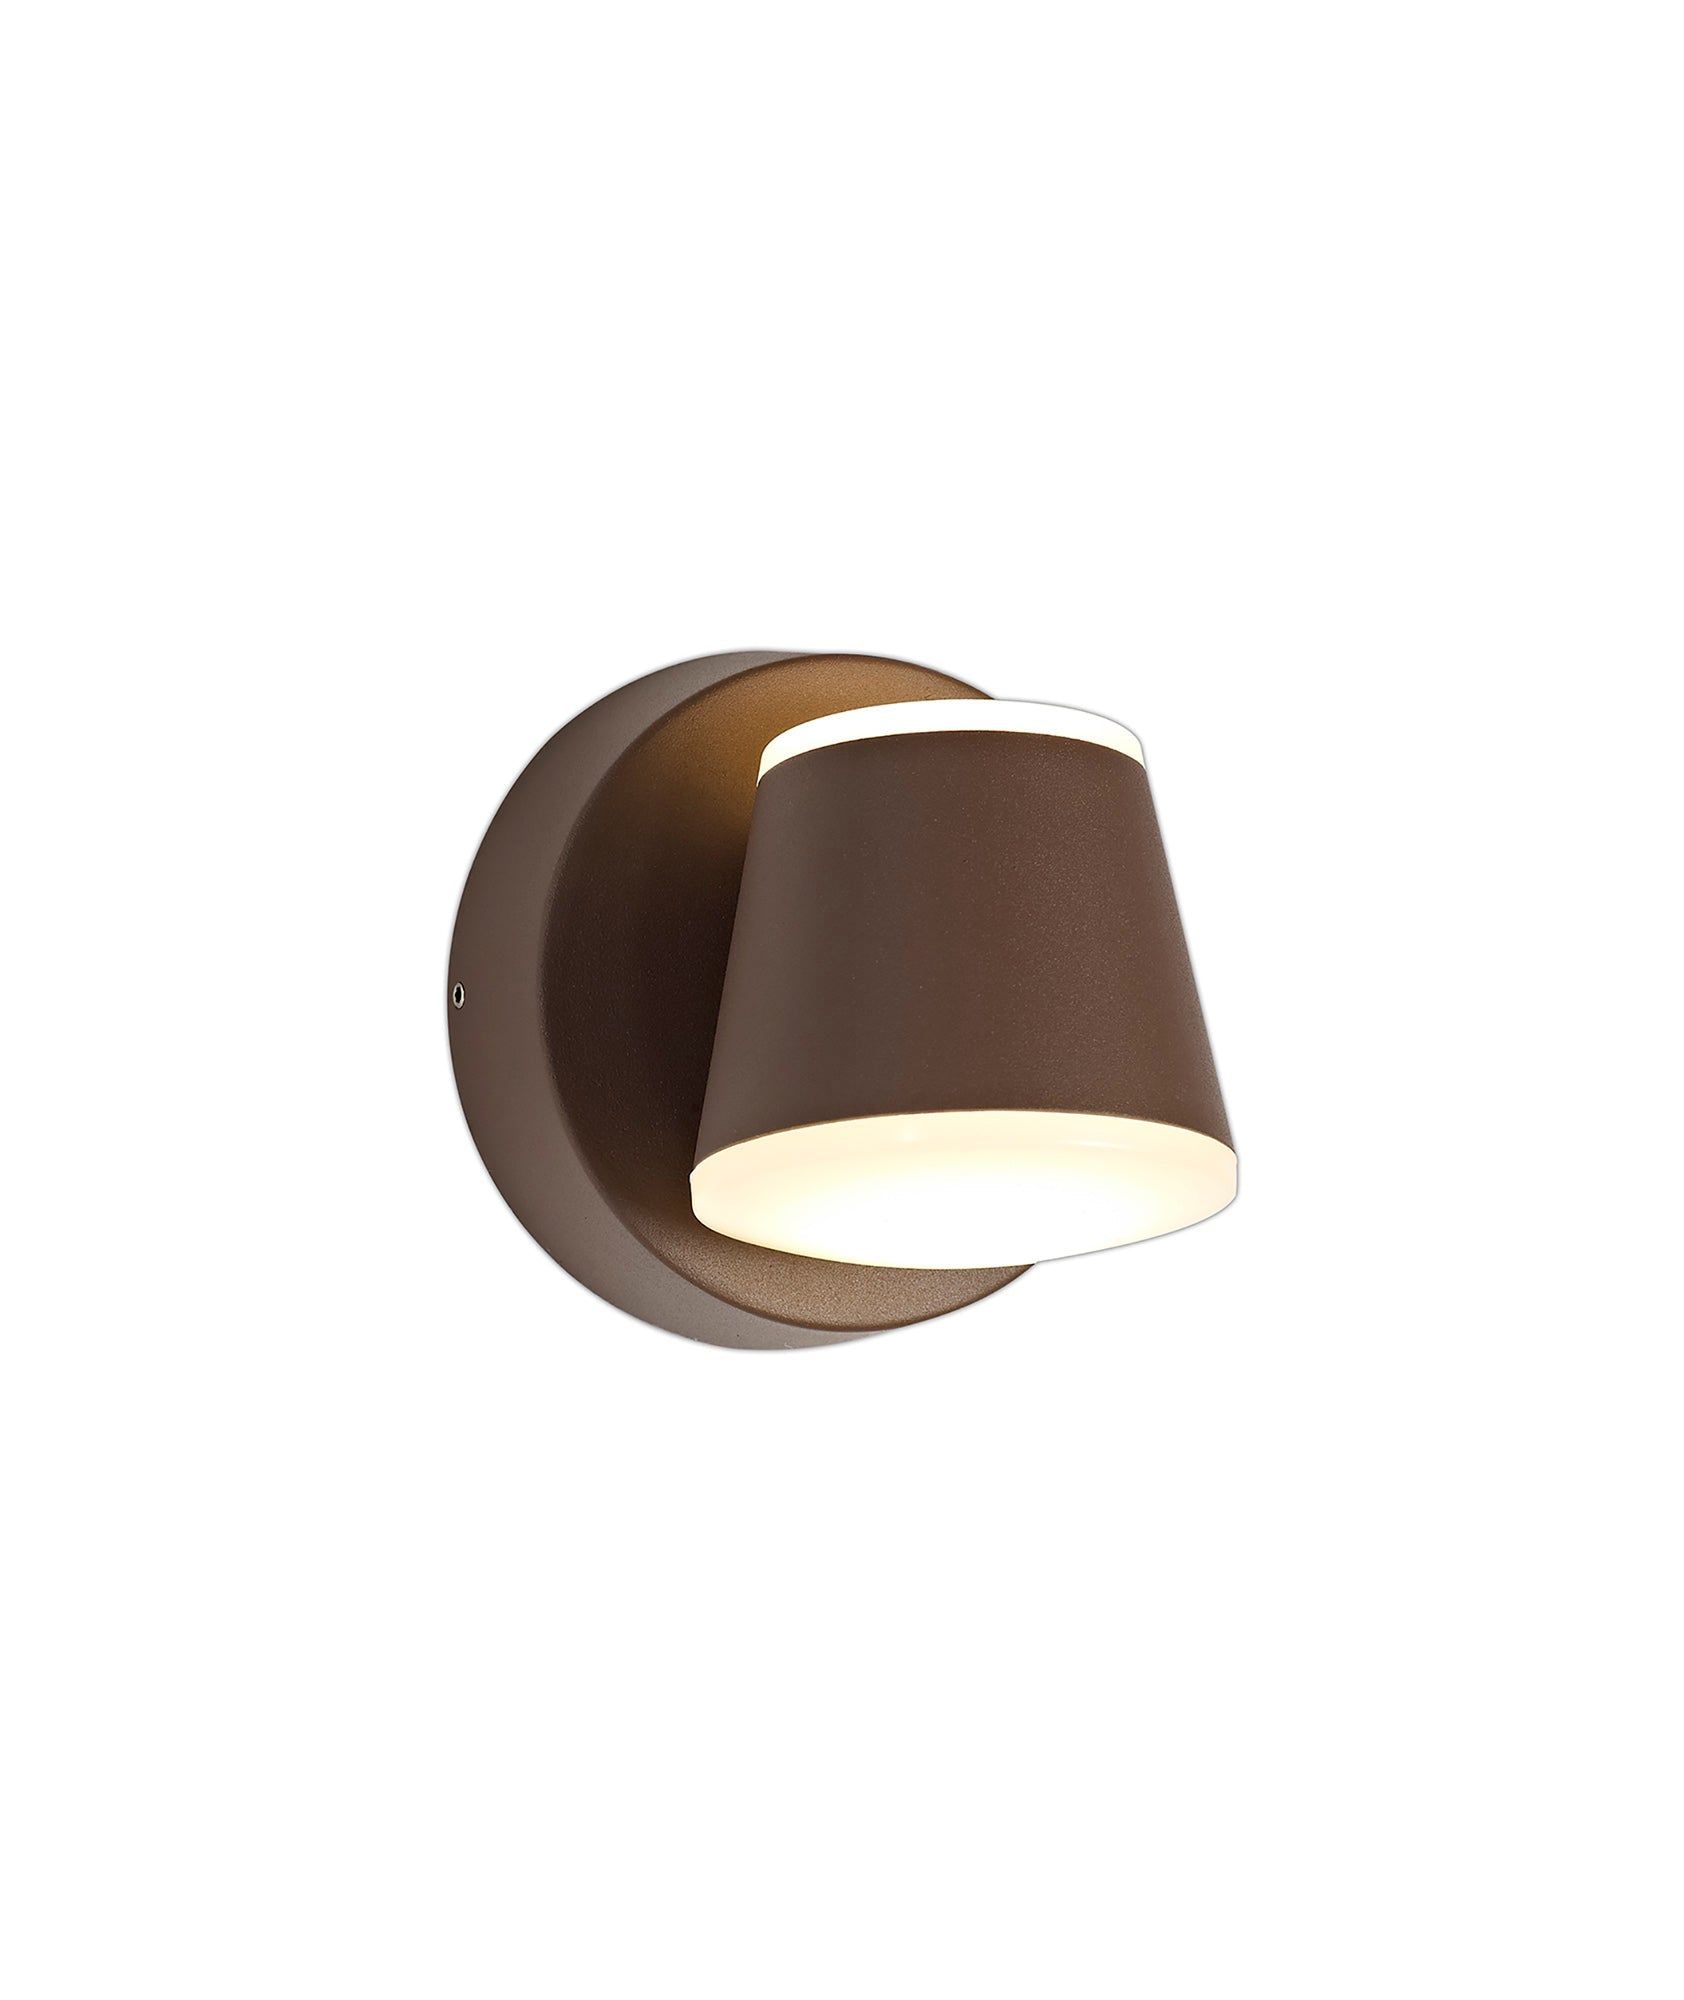 Yeiobs Wall Lamp, 2 x 6W LED, 3000K, 590lm, IP54, Dark Brown, 3yrs Warranty